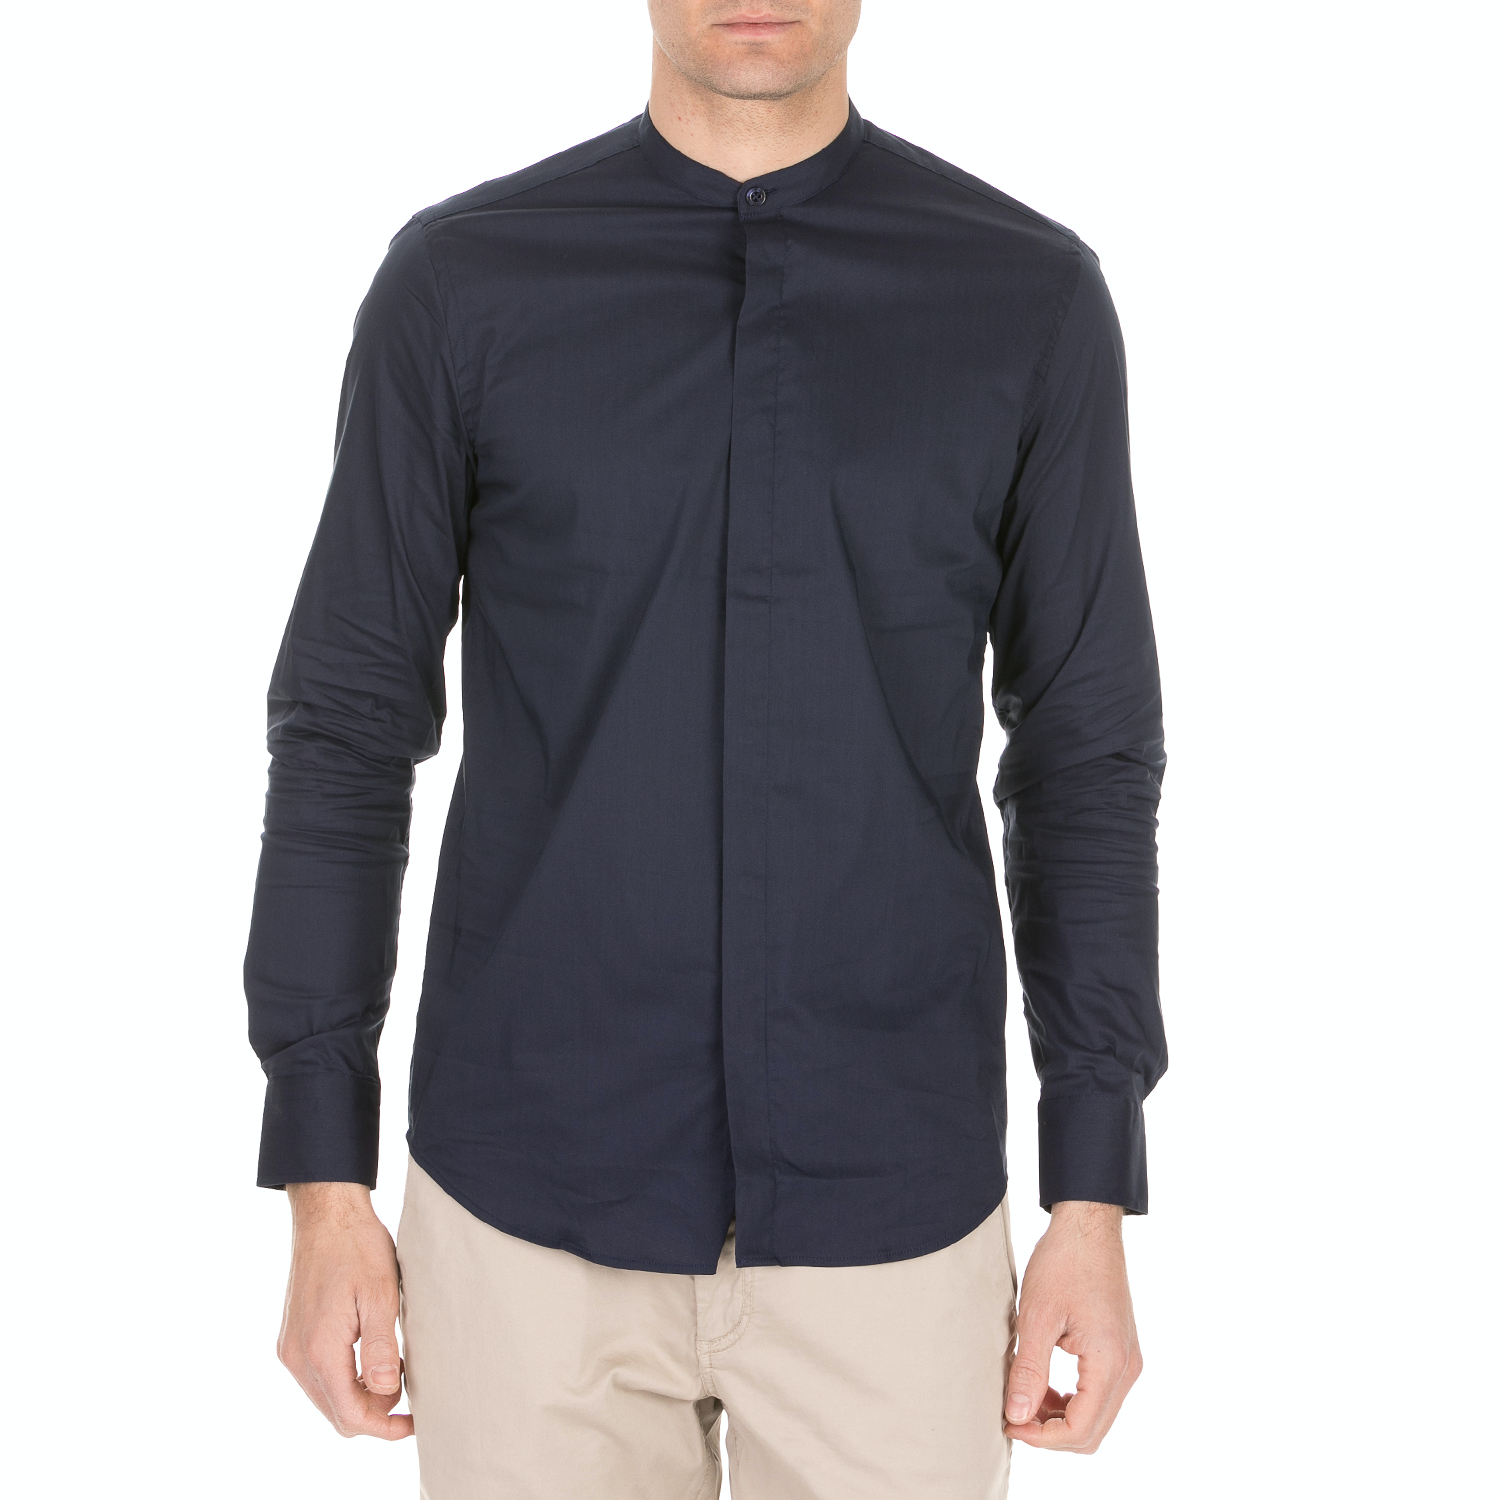 SSEINSE - Ανδρικό πουκάμισο SSEINSE μπλε Ανδρικά/Ρούχα/Πουκάμισα/Μακρυμάνικα